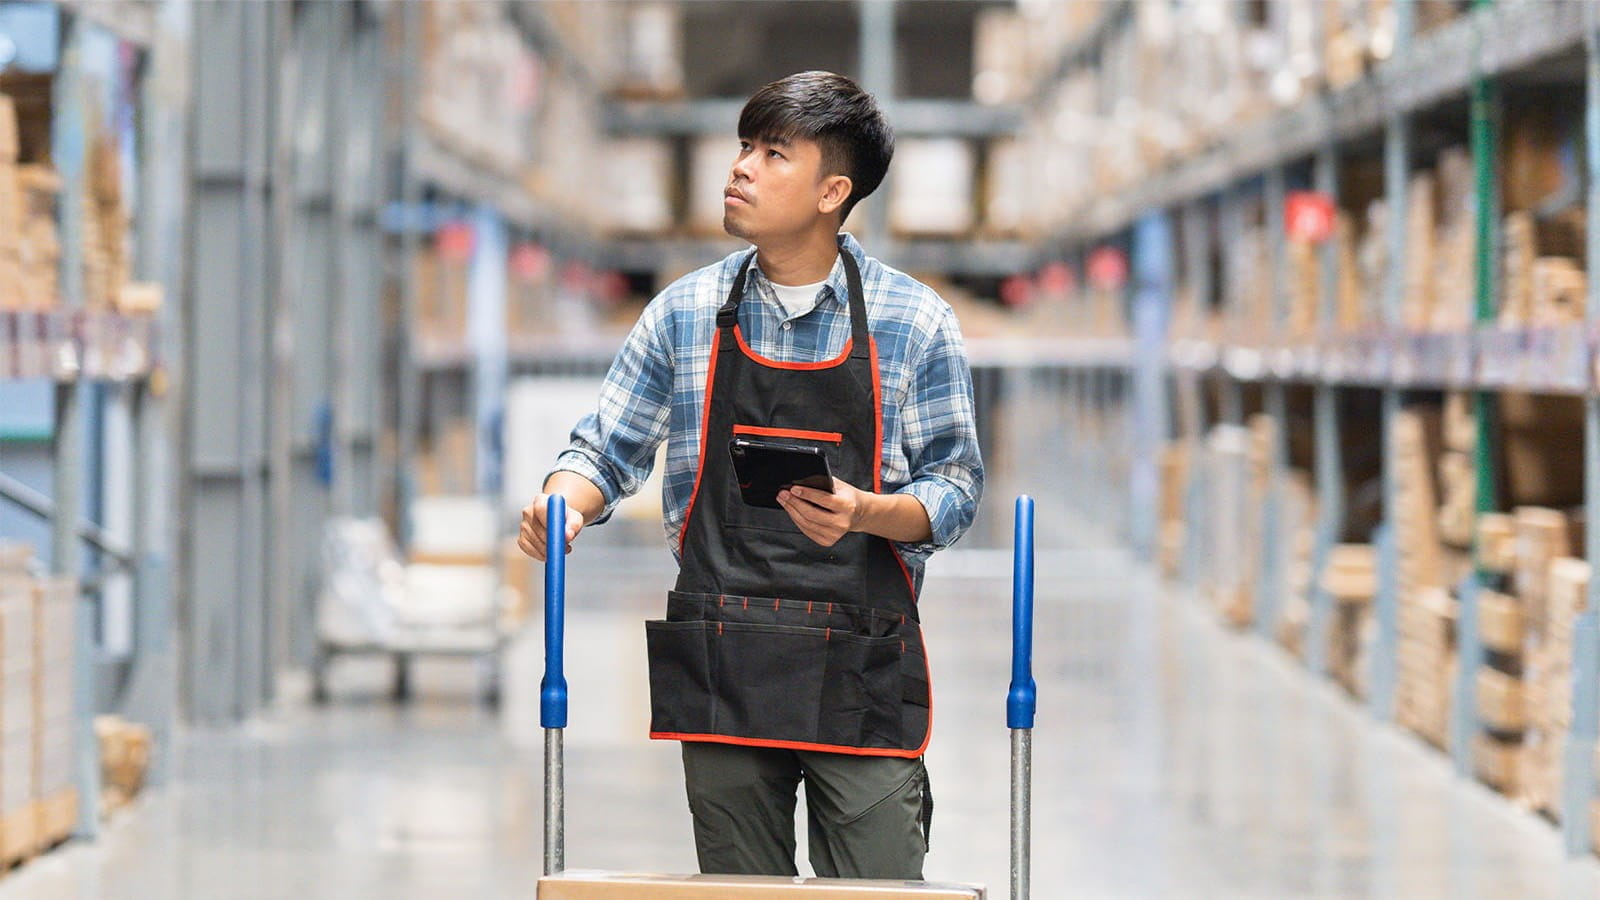 warehouse employee young asian man wearing an apron pushing a trolley trade exports boxes